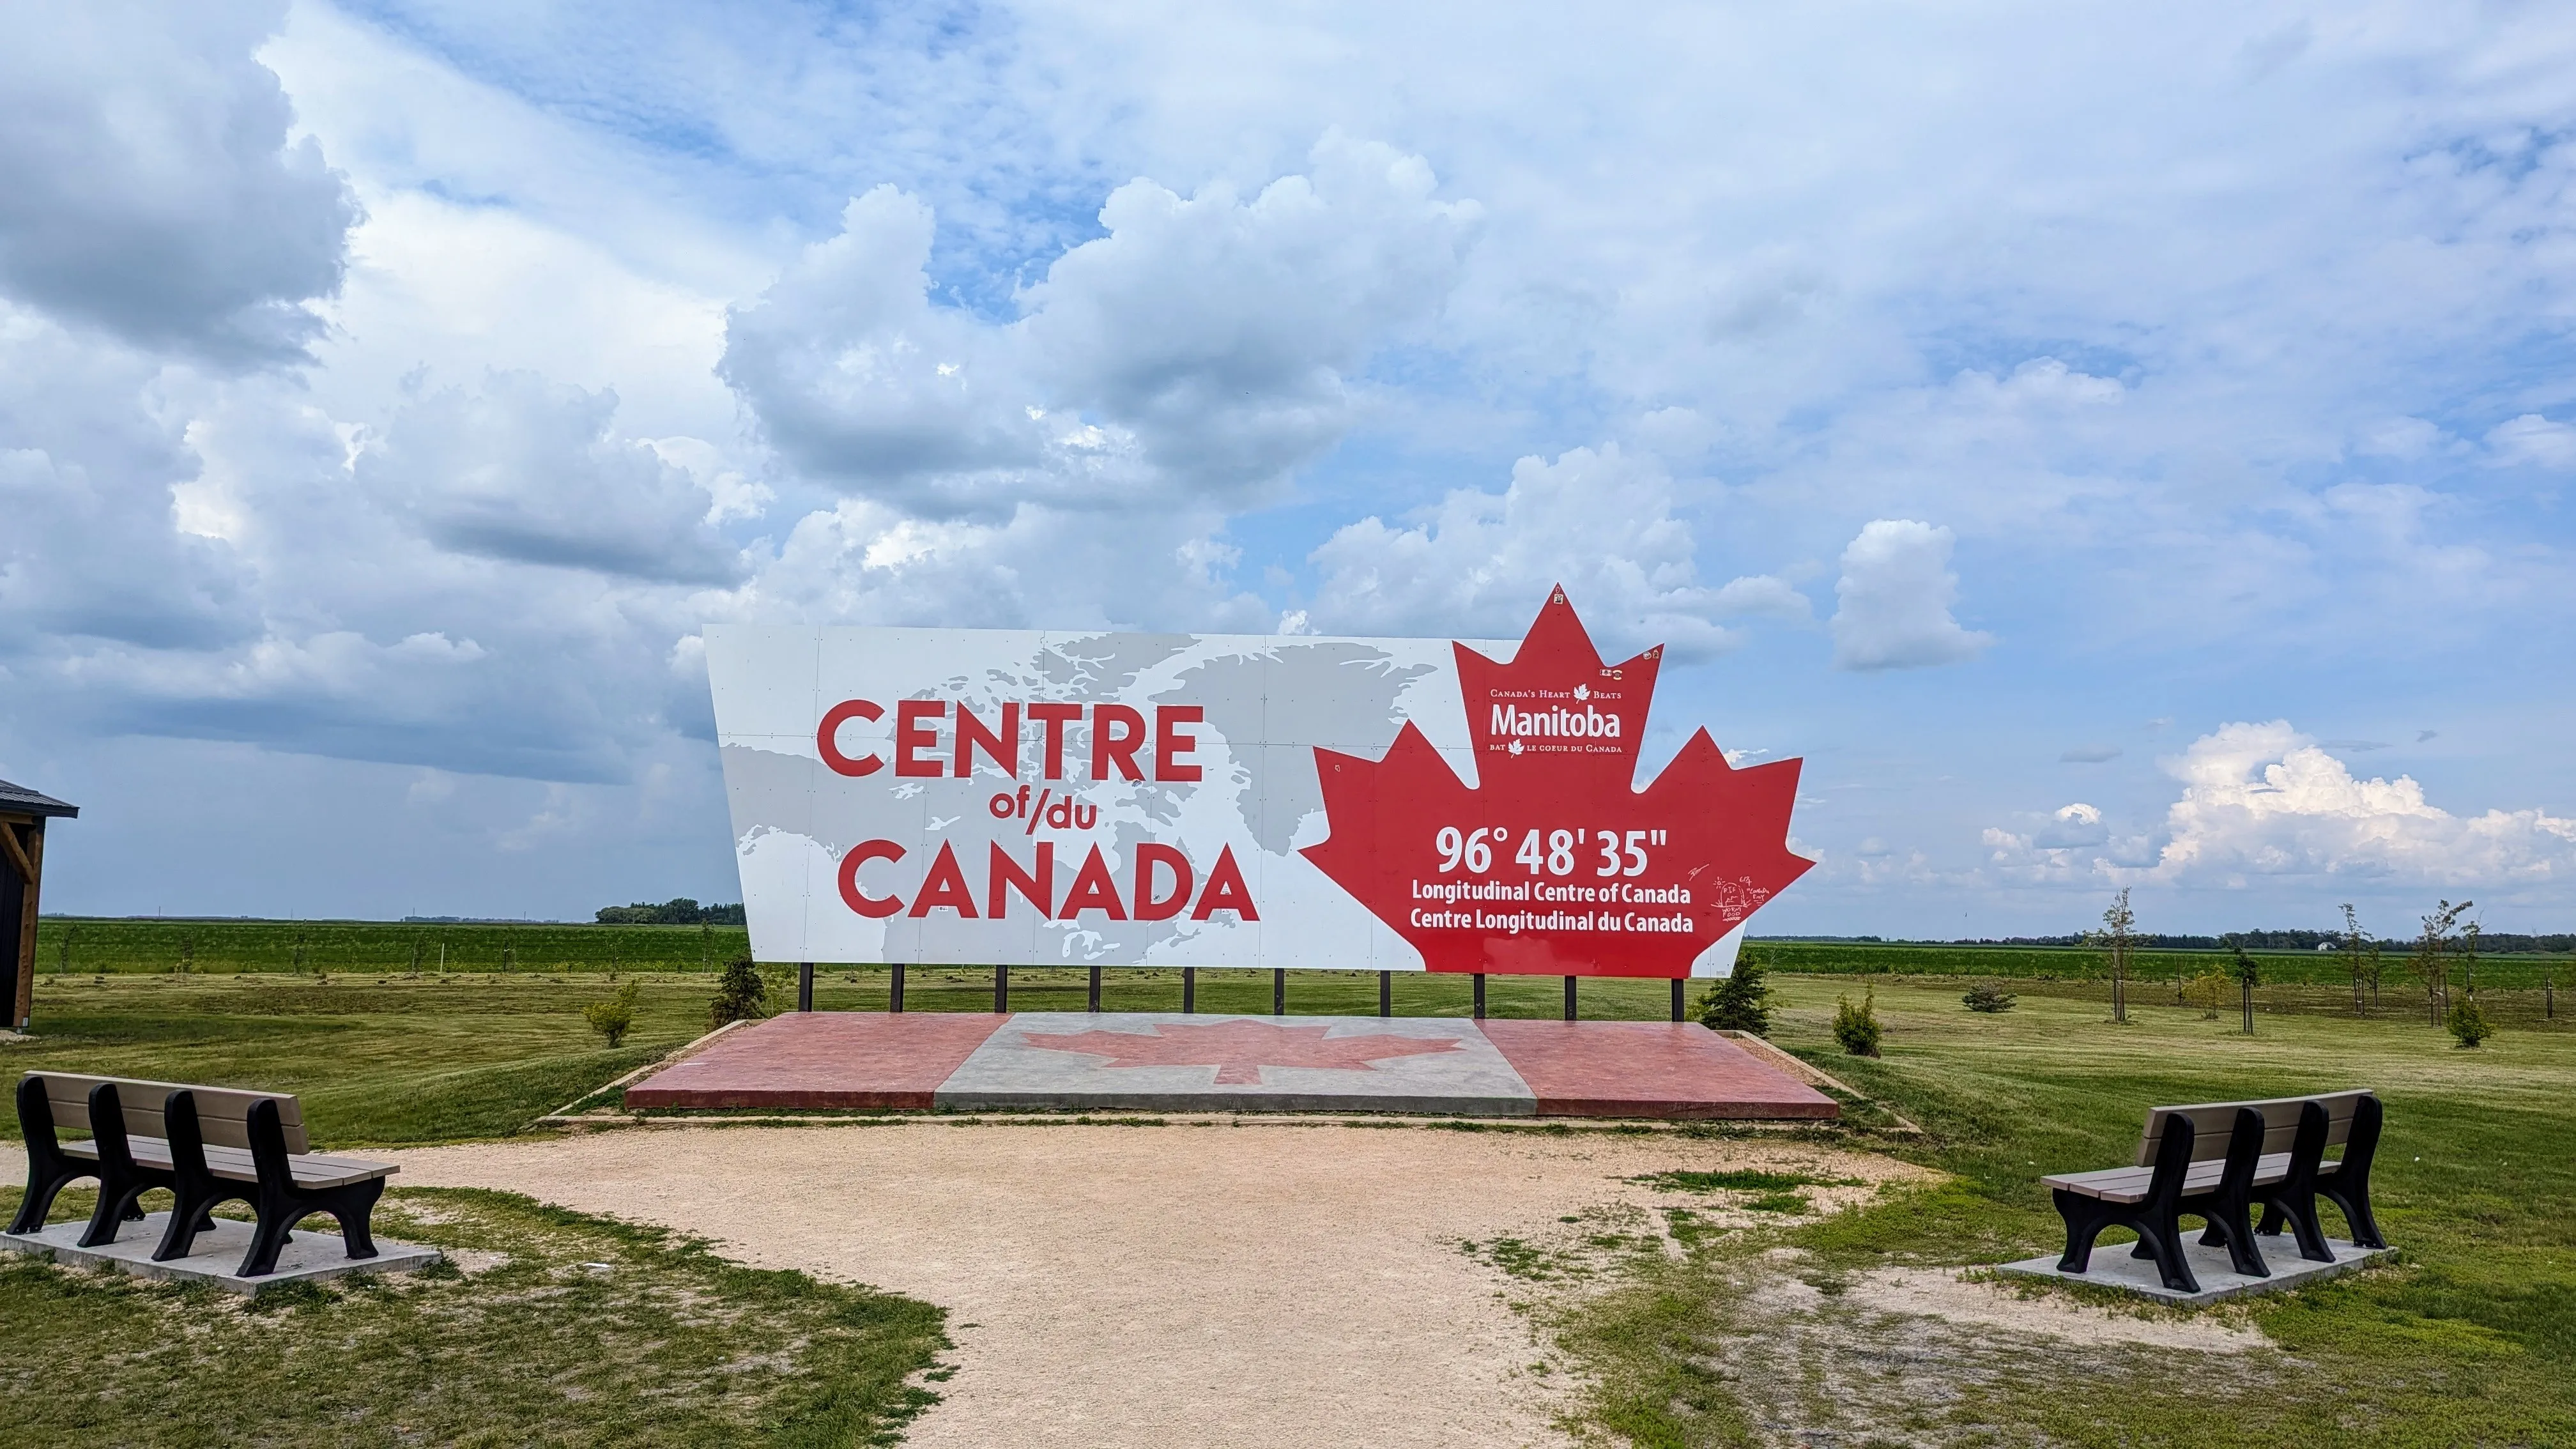 Center of Canada